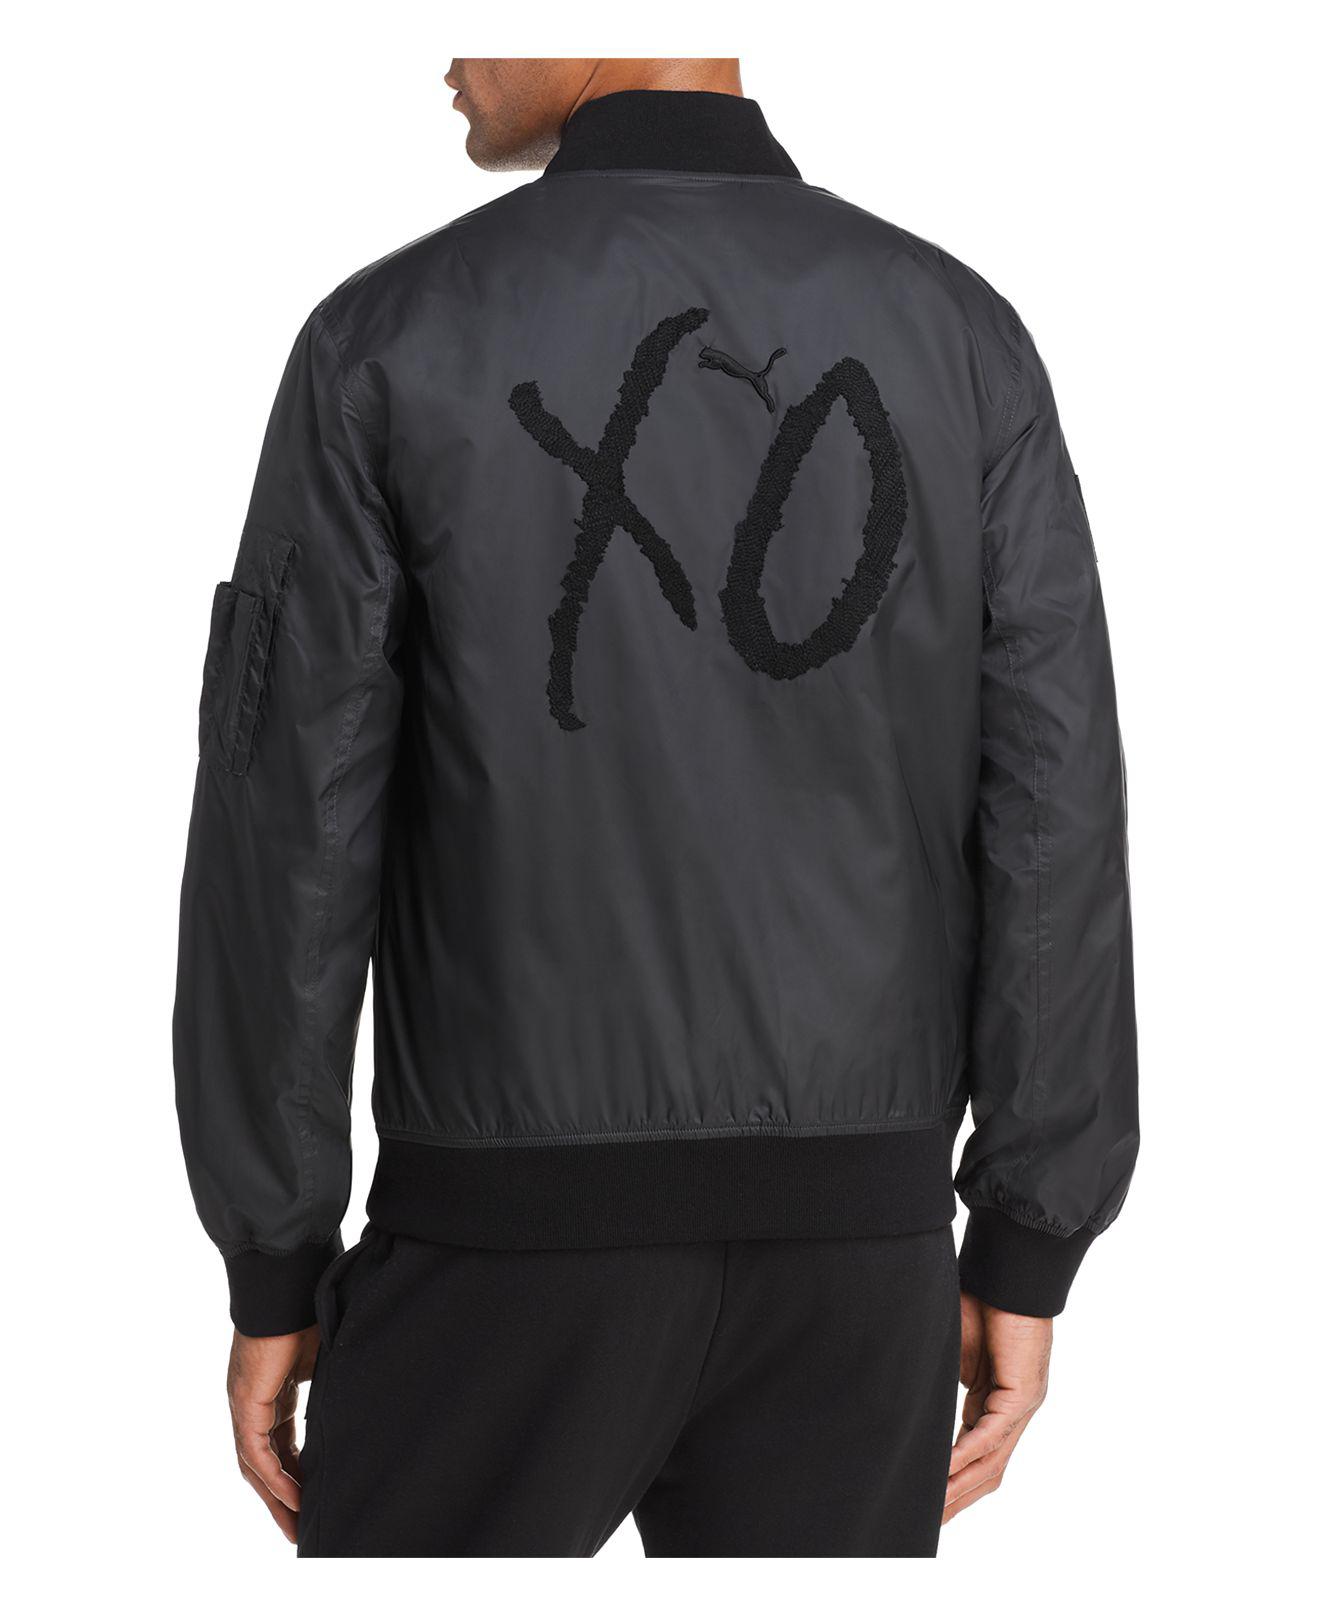 PUMA X Xo The Weeknd Bomber Jacket in 